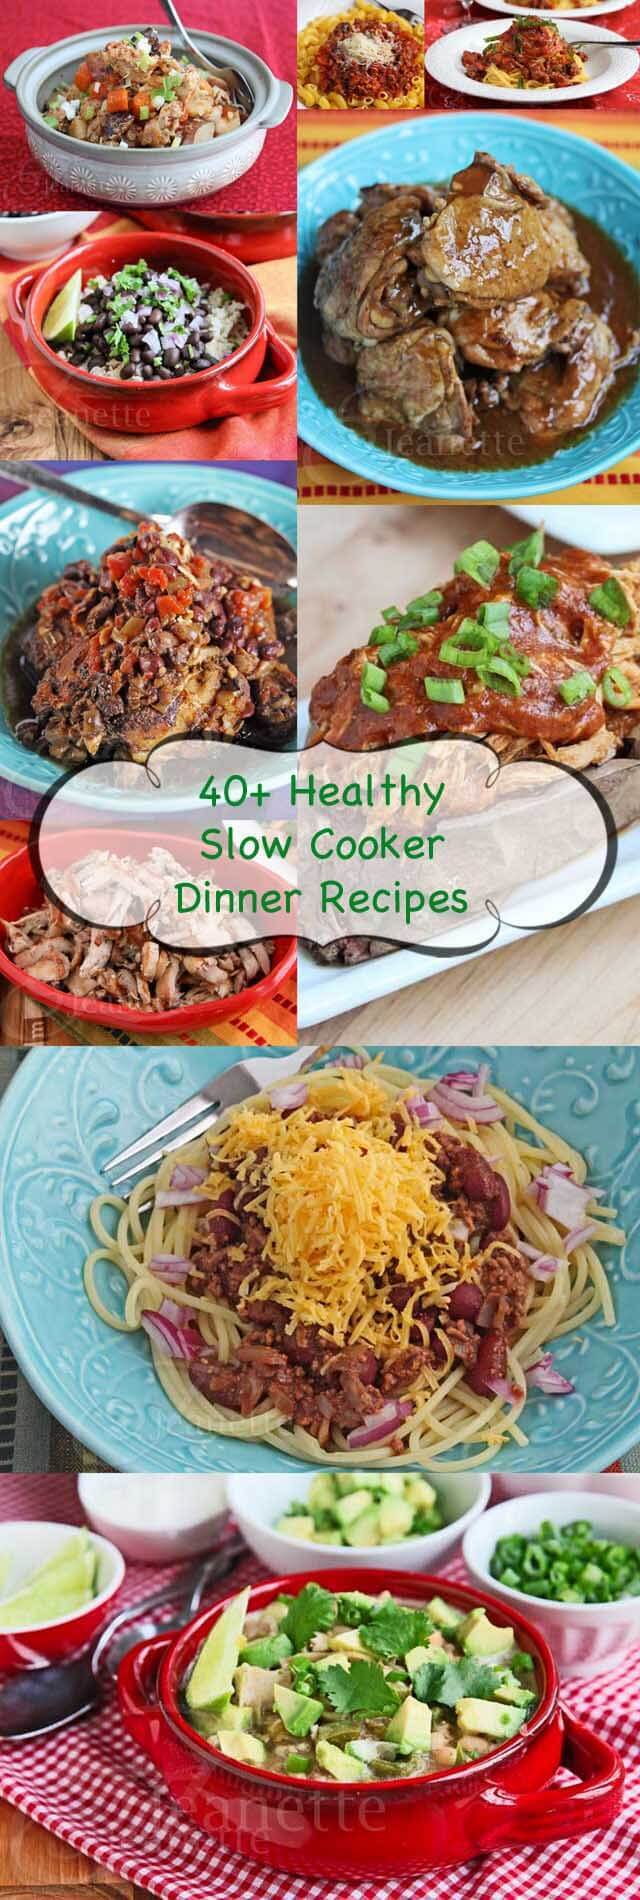 Slow Cooker Dinner Recipes